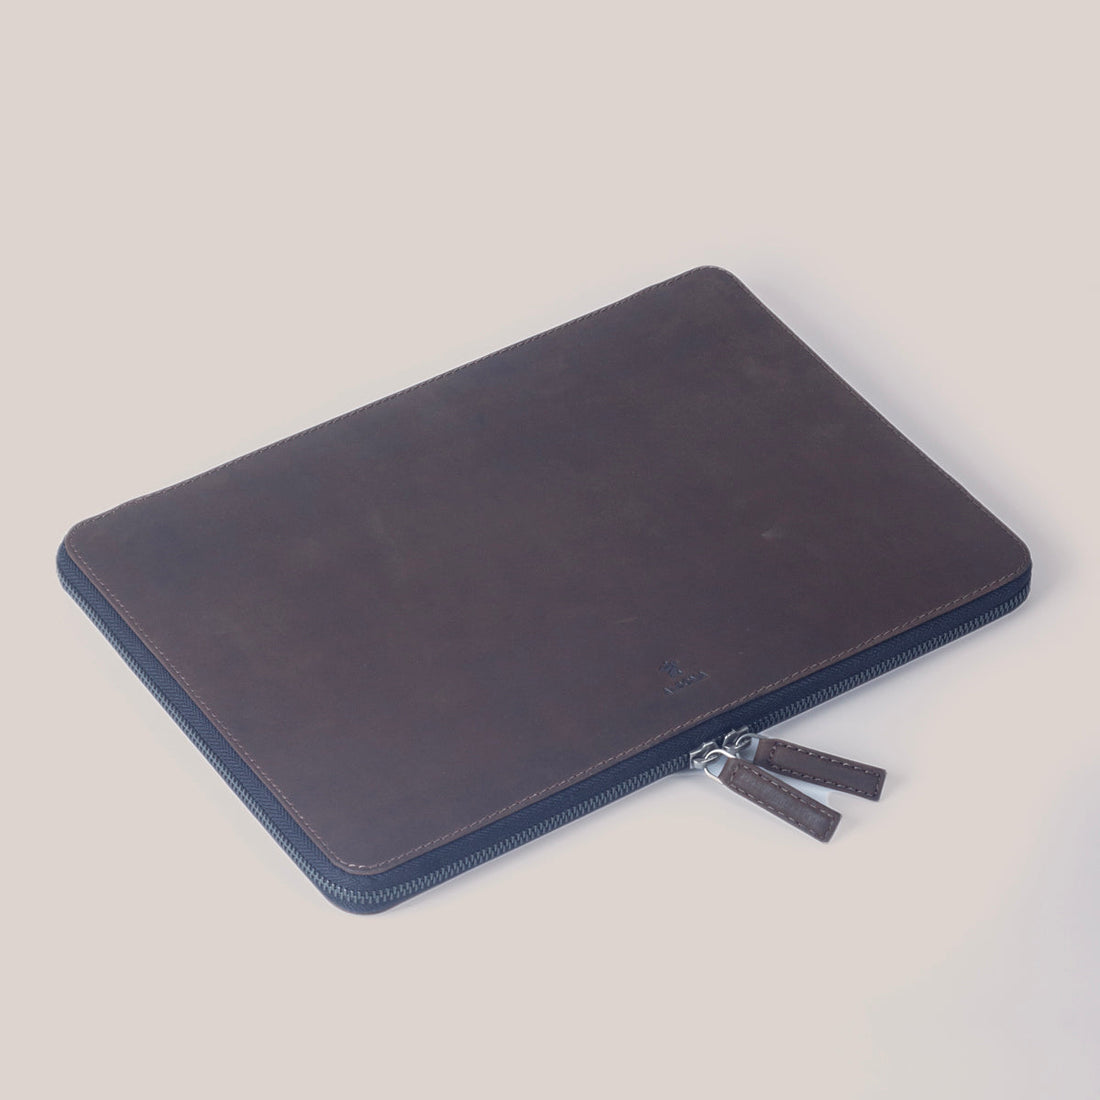 MacBook Air 15 Zippered Laptop Case - Vintage Tan